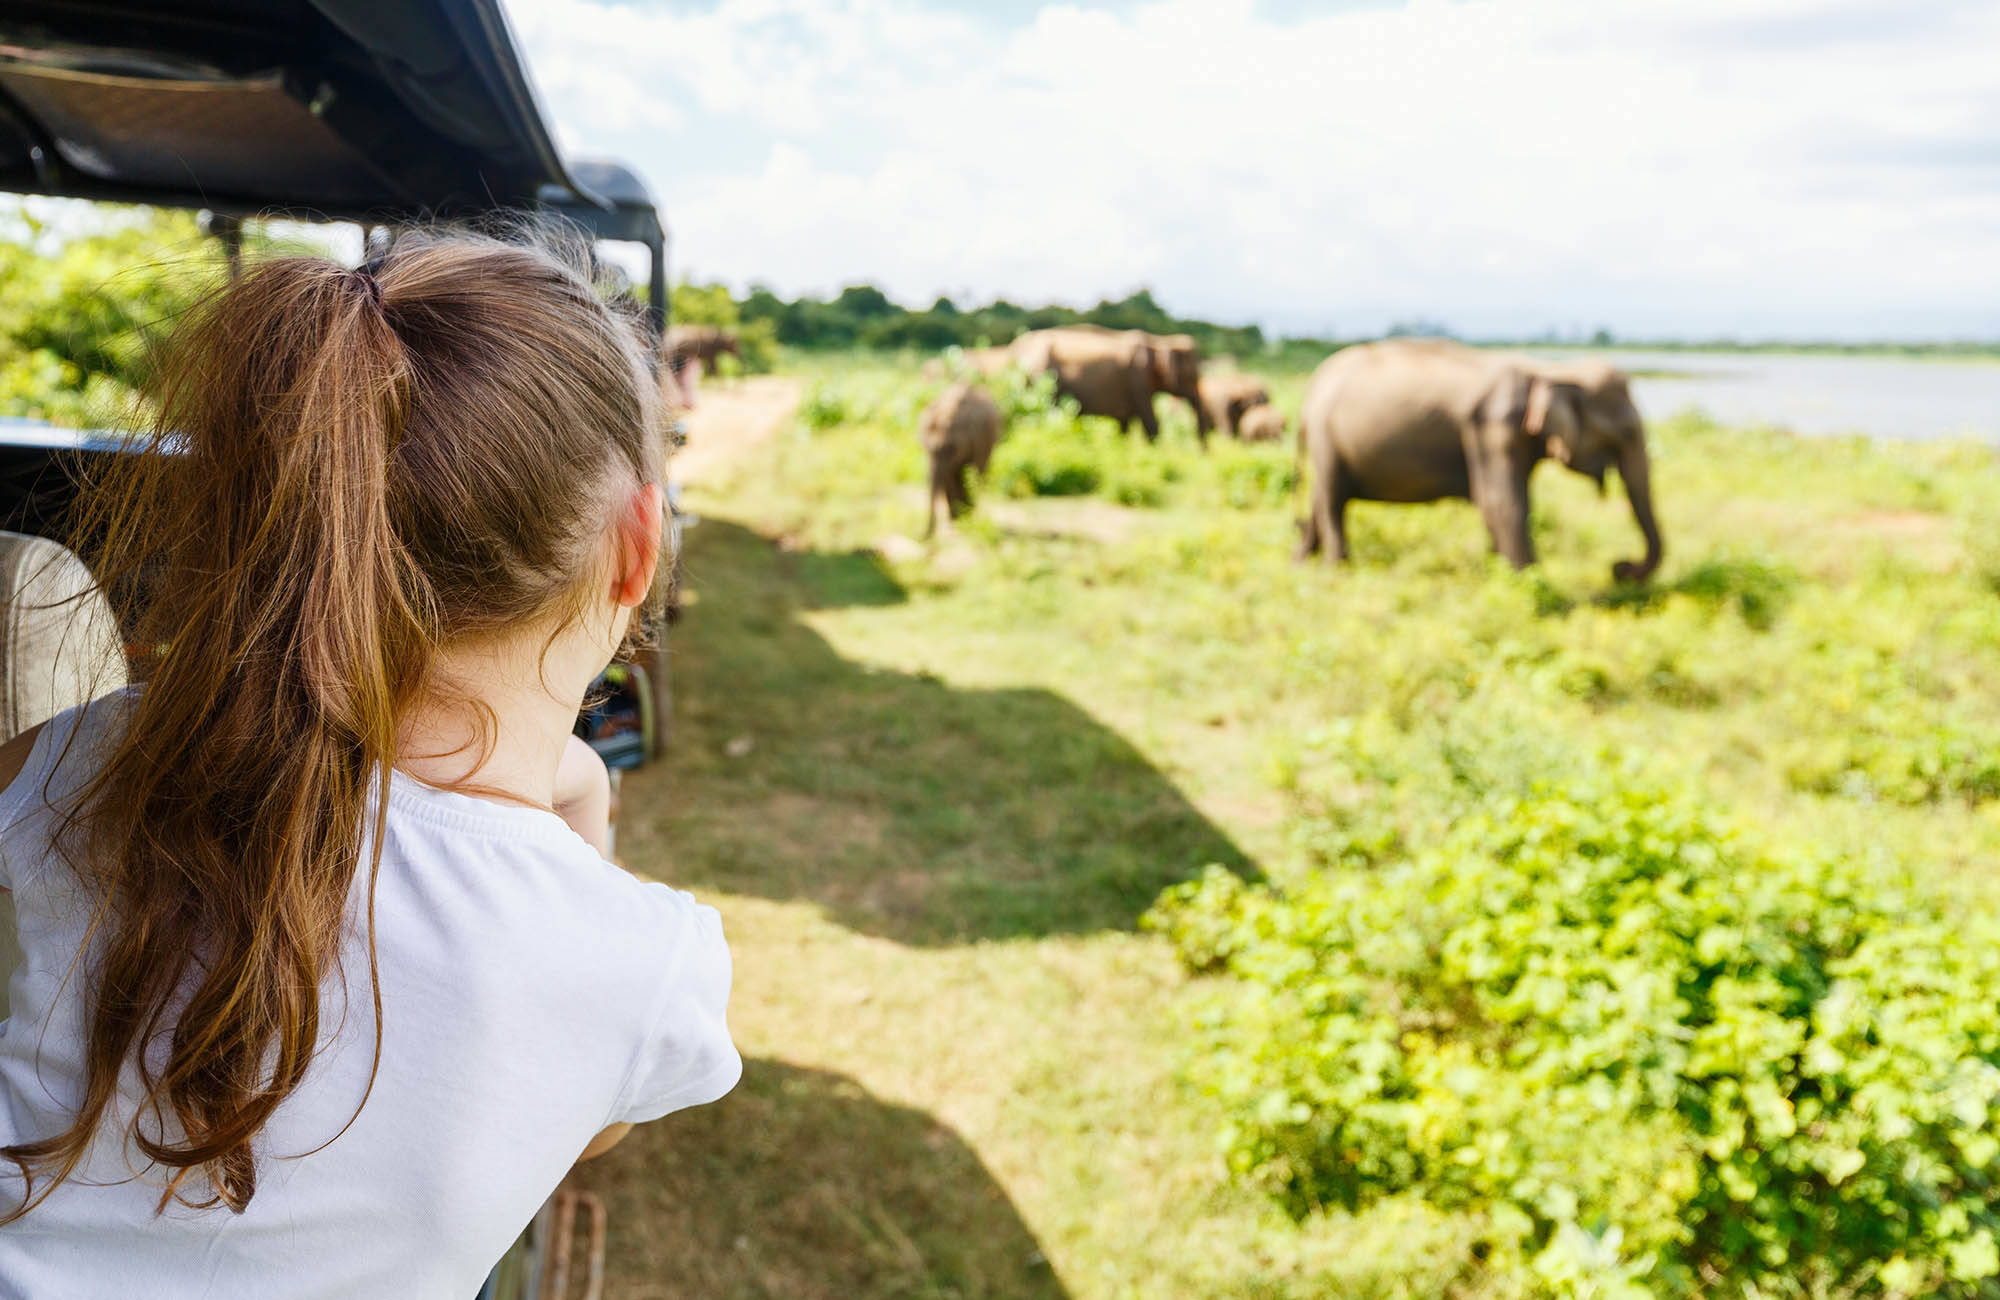 Spot olifanten tijdens een safari in Sri Lanka | Rondreis Malediven en Sri Lanka | KILROY